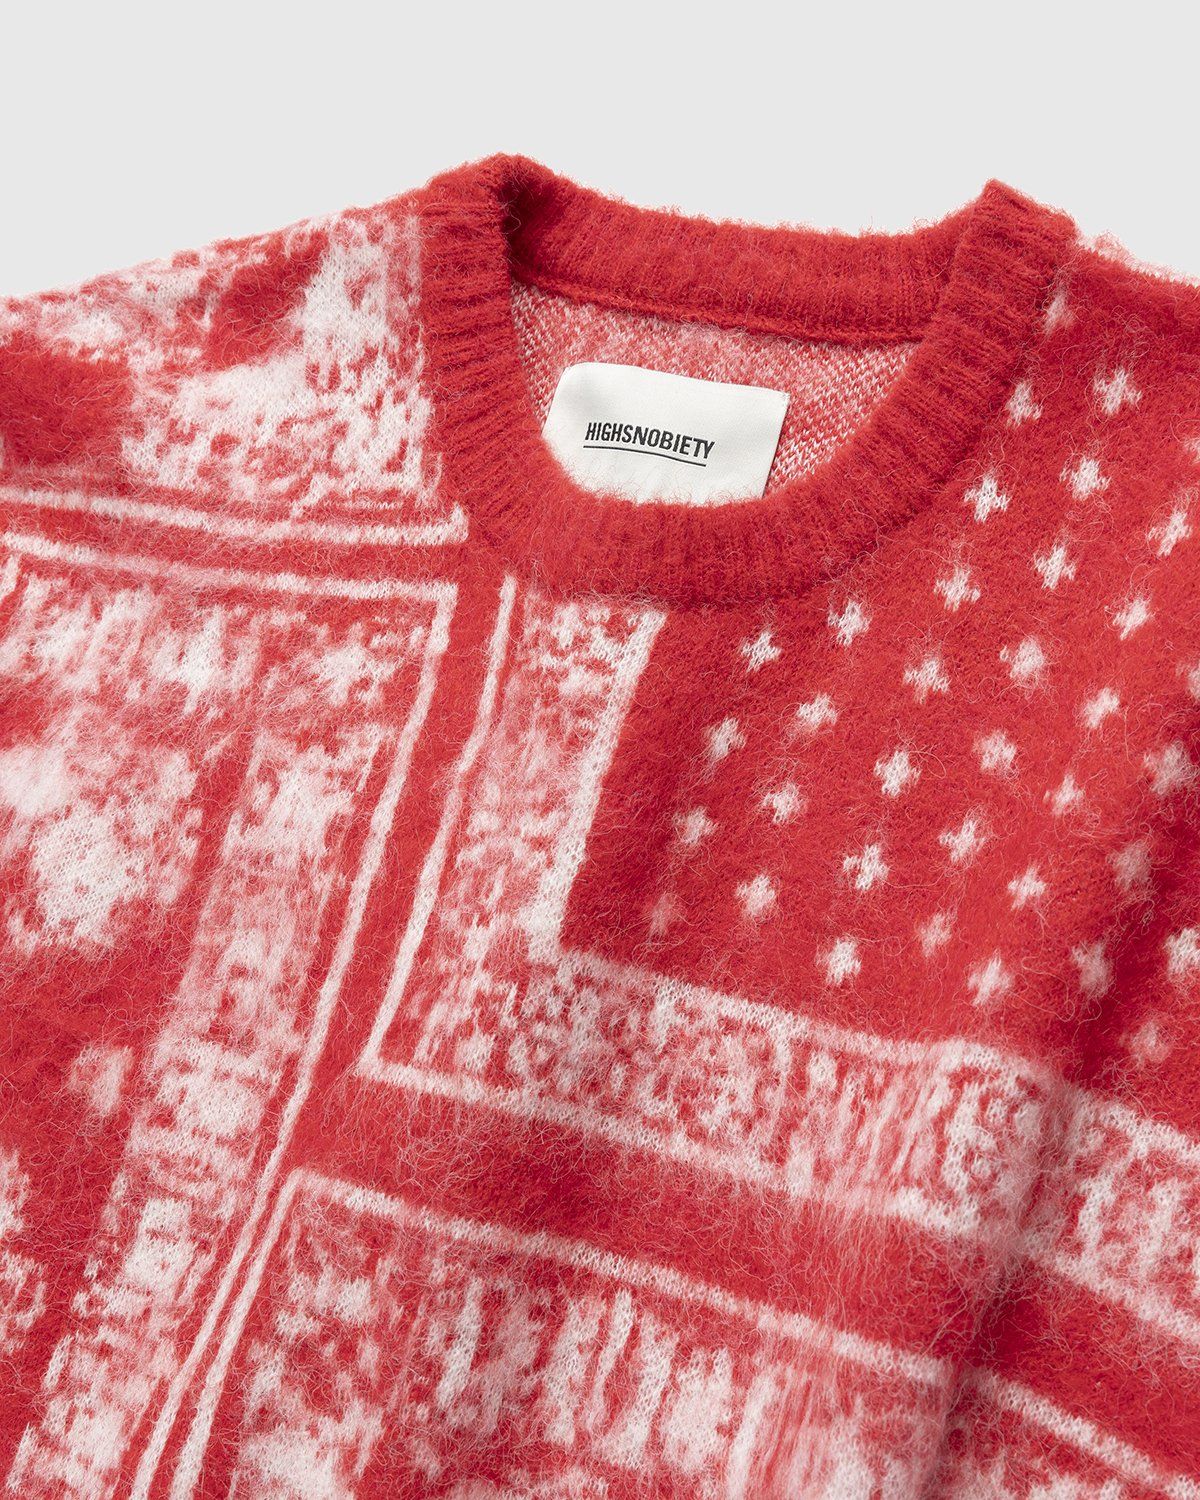 Highsnobiety – Bandana Alpaca Sweater Red - Crewnecks - Red - Image 4